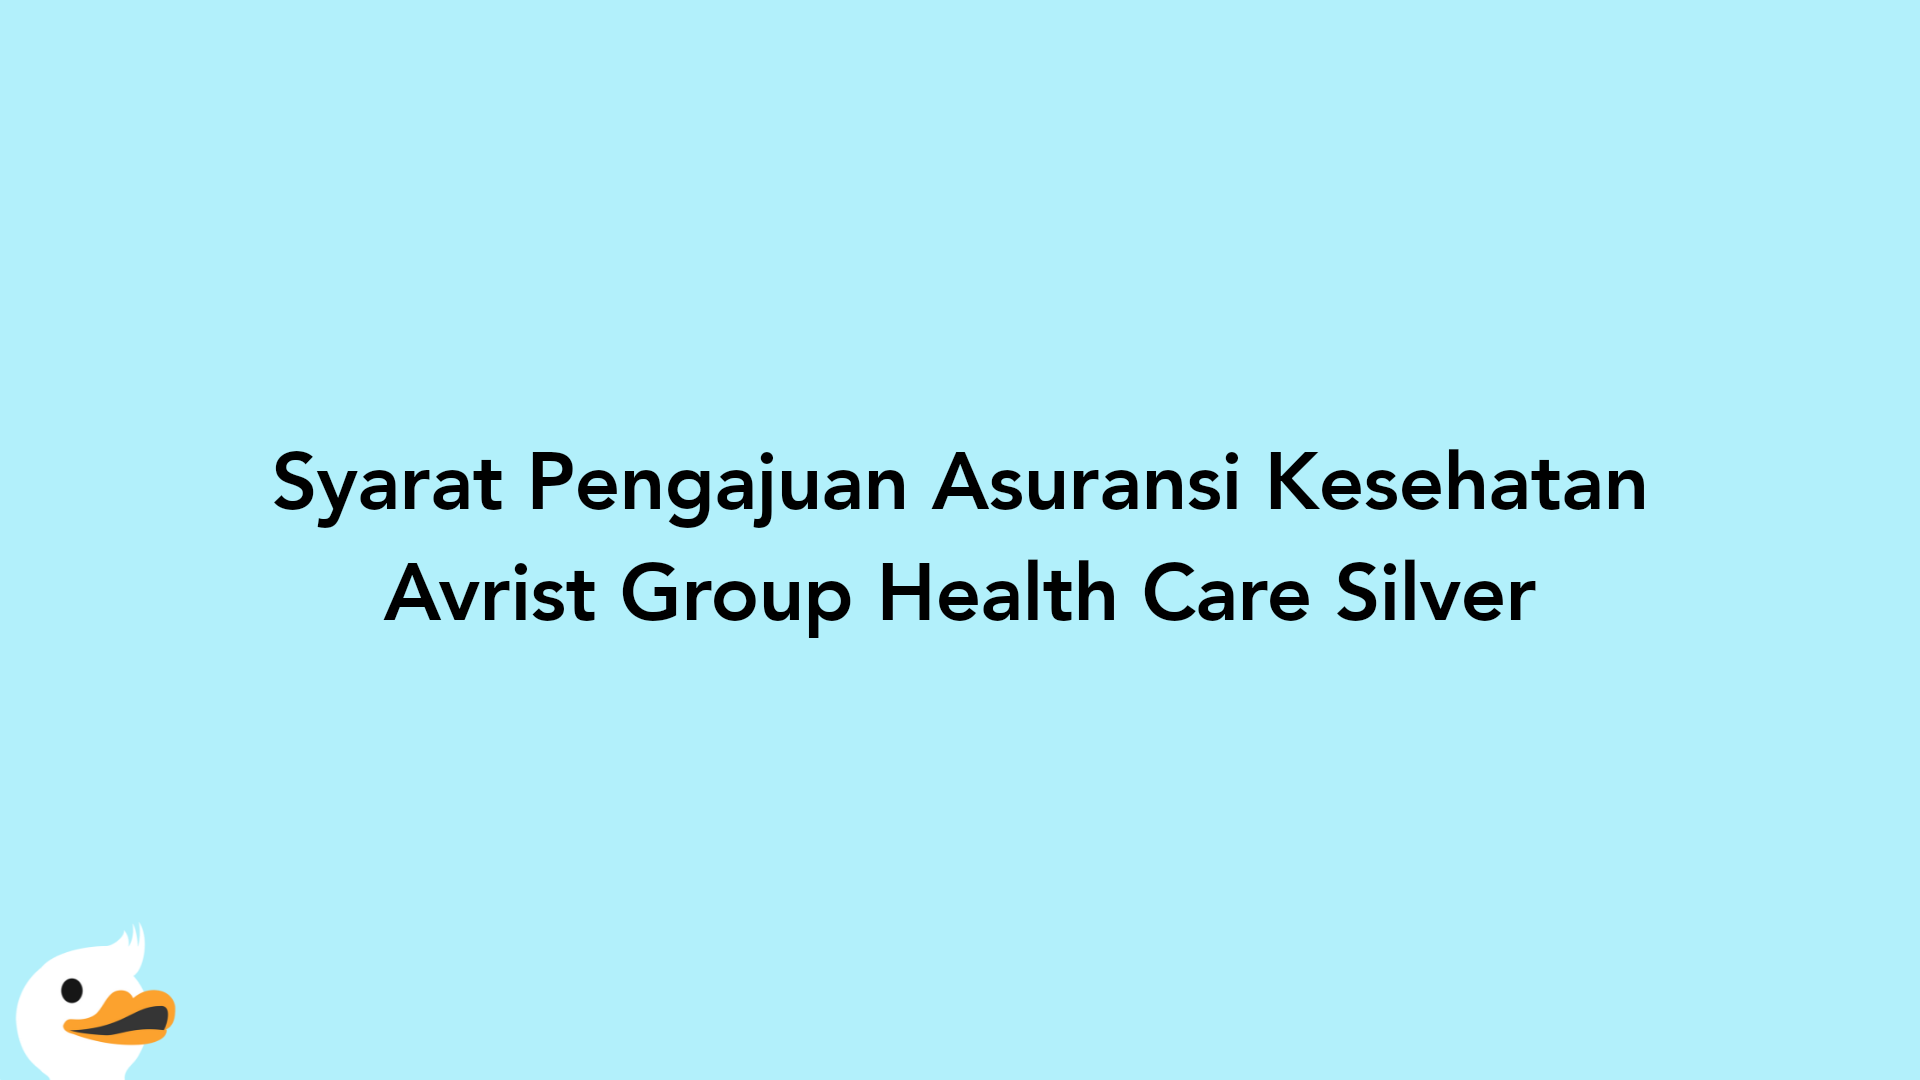 Syarat Pengajuan Asuransi Kesehatan Avrist Group Health Care Silver